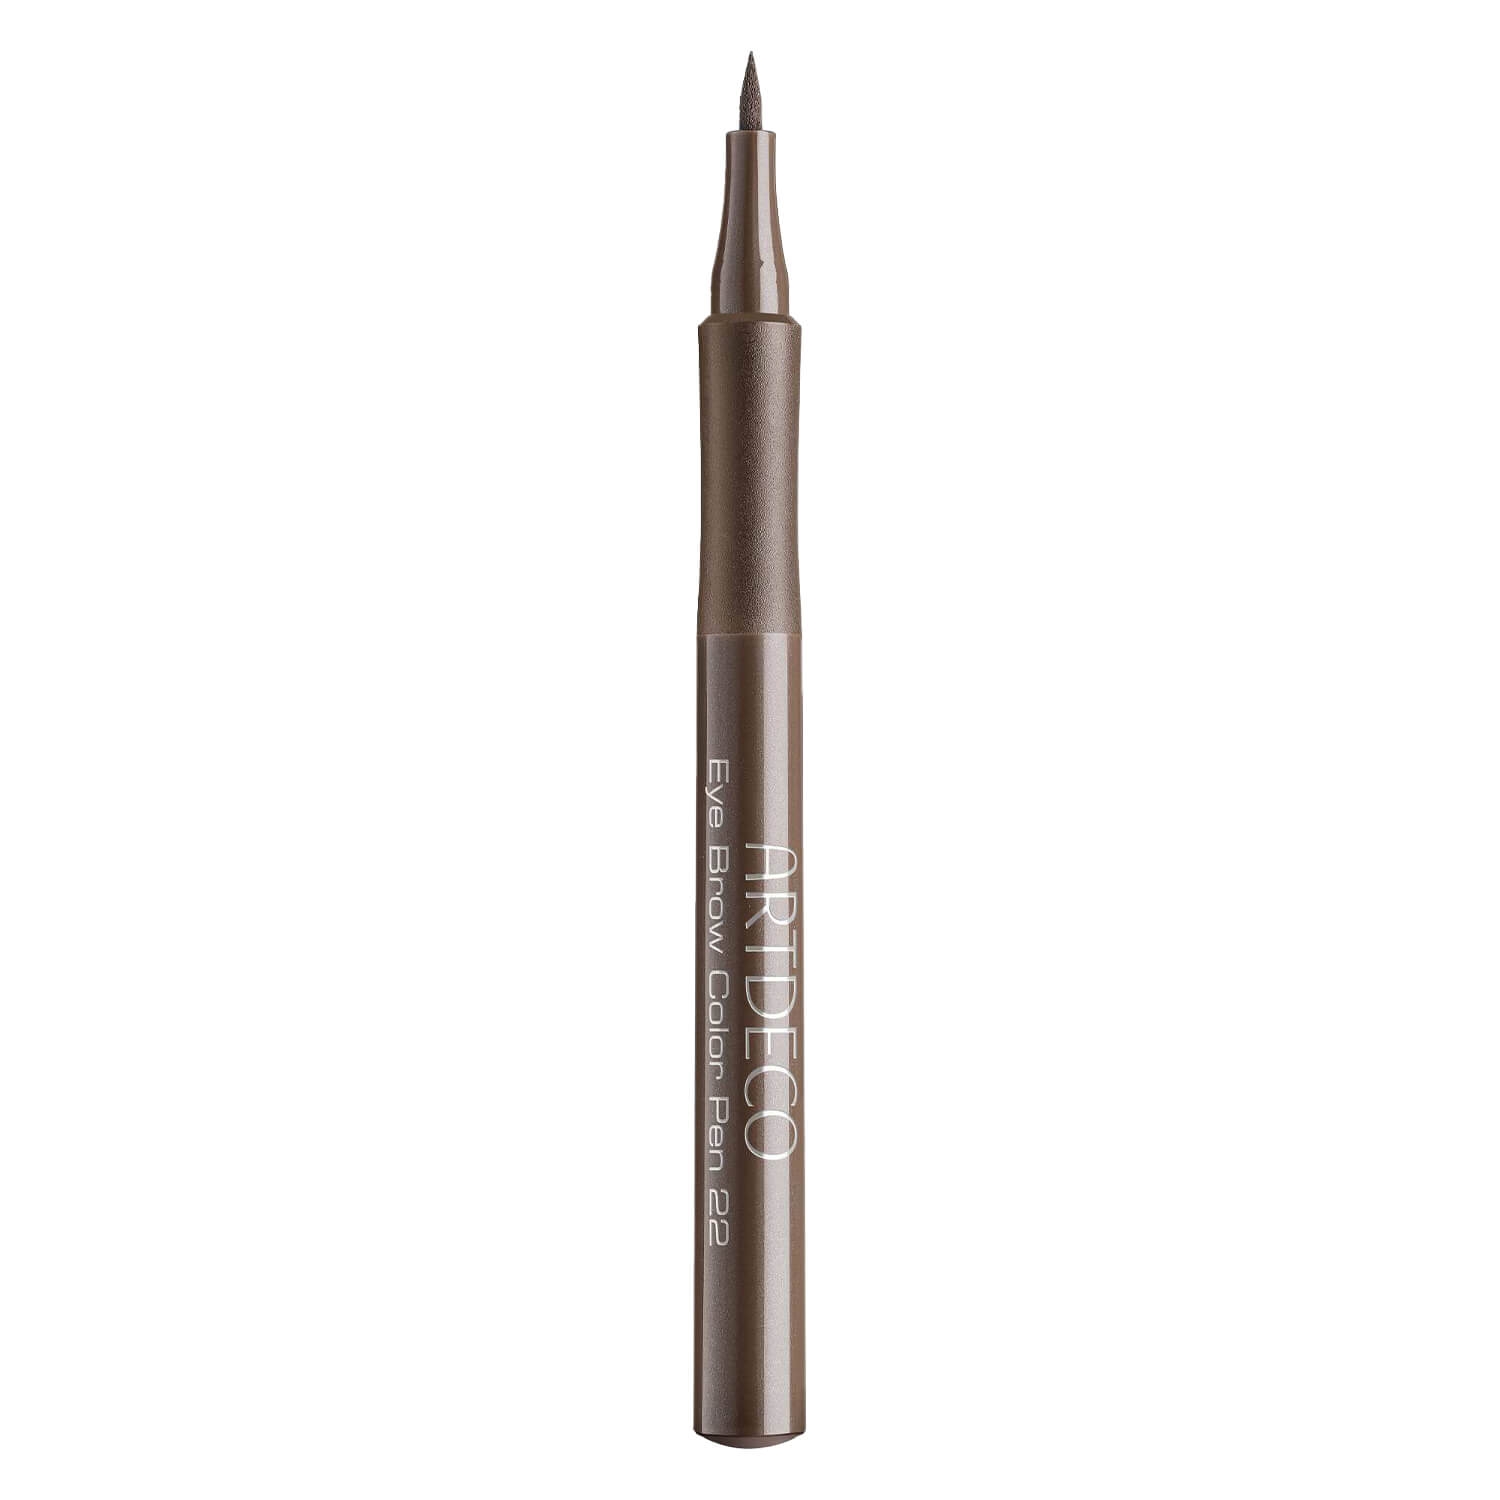 Produktbild von Artdeco Brows - Eye Brow Color Pen Medium Brunette 22